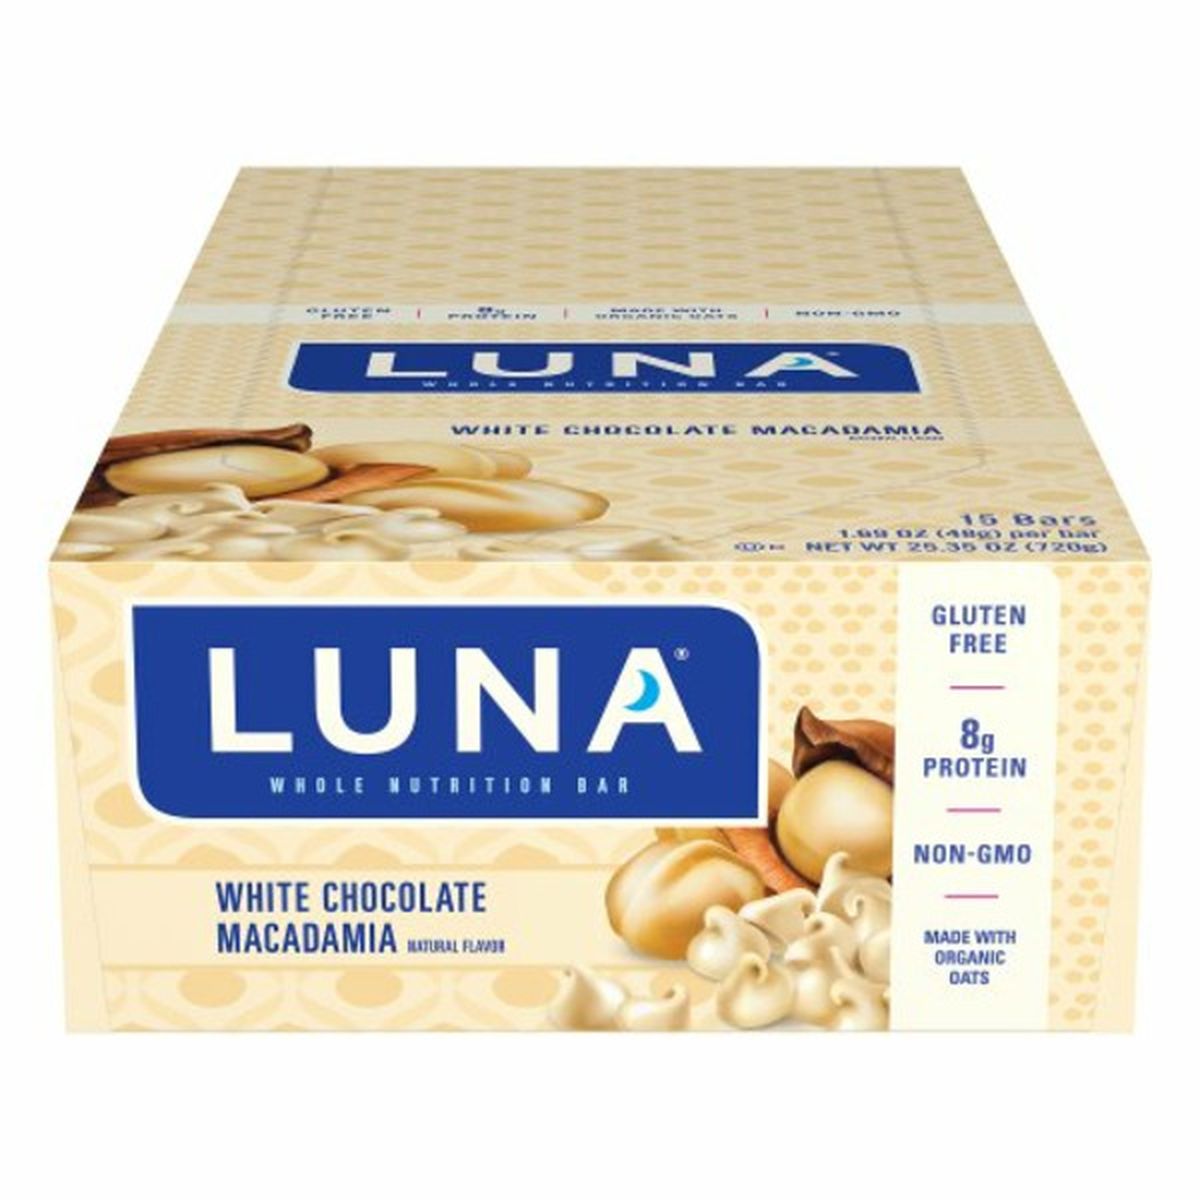 Calories in Luna Whole Nutrition Bar, White Chocolate Macadamia